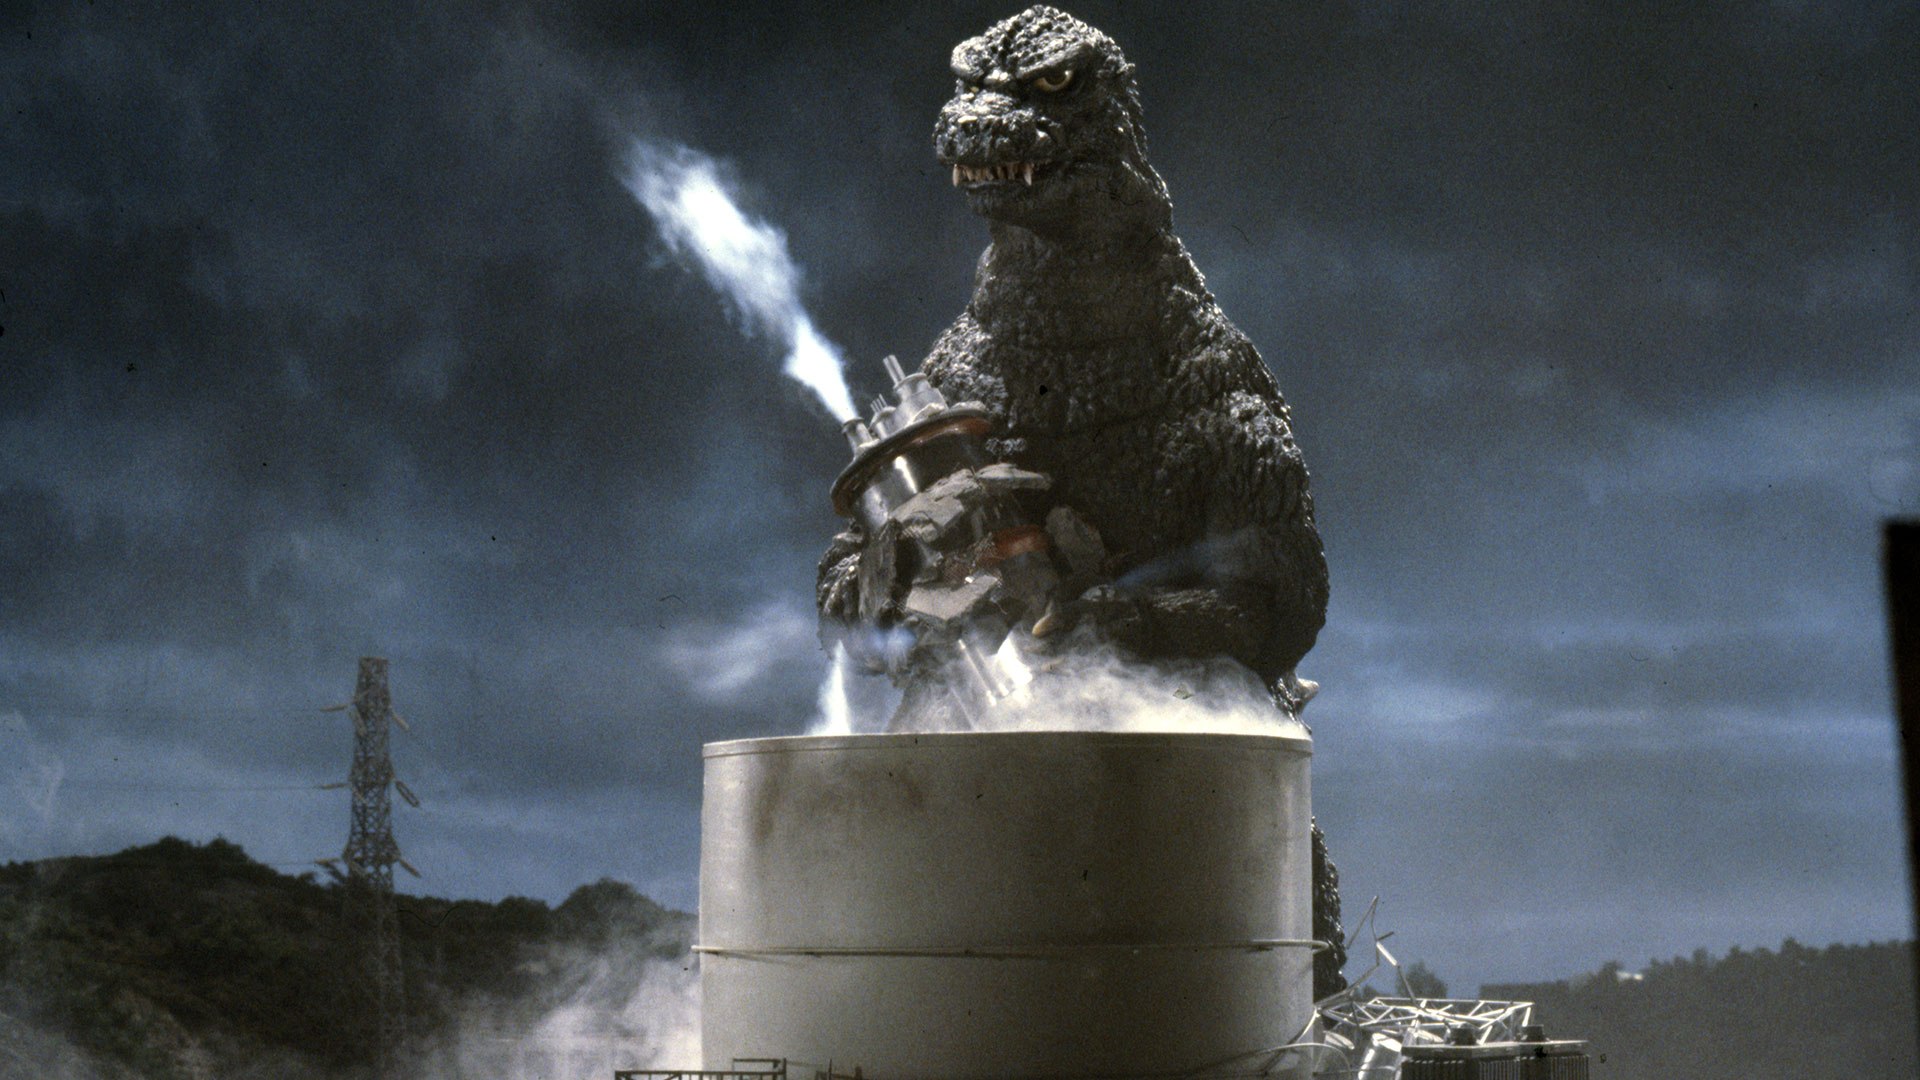 Godzilla back and ferocious once again in Godzilla 1985 (1984)